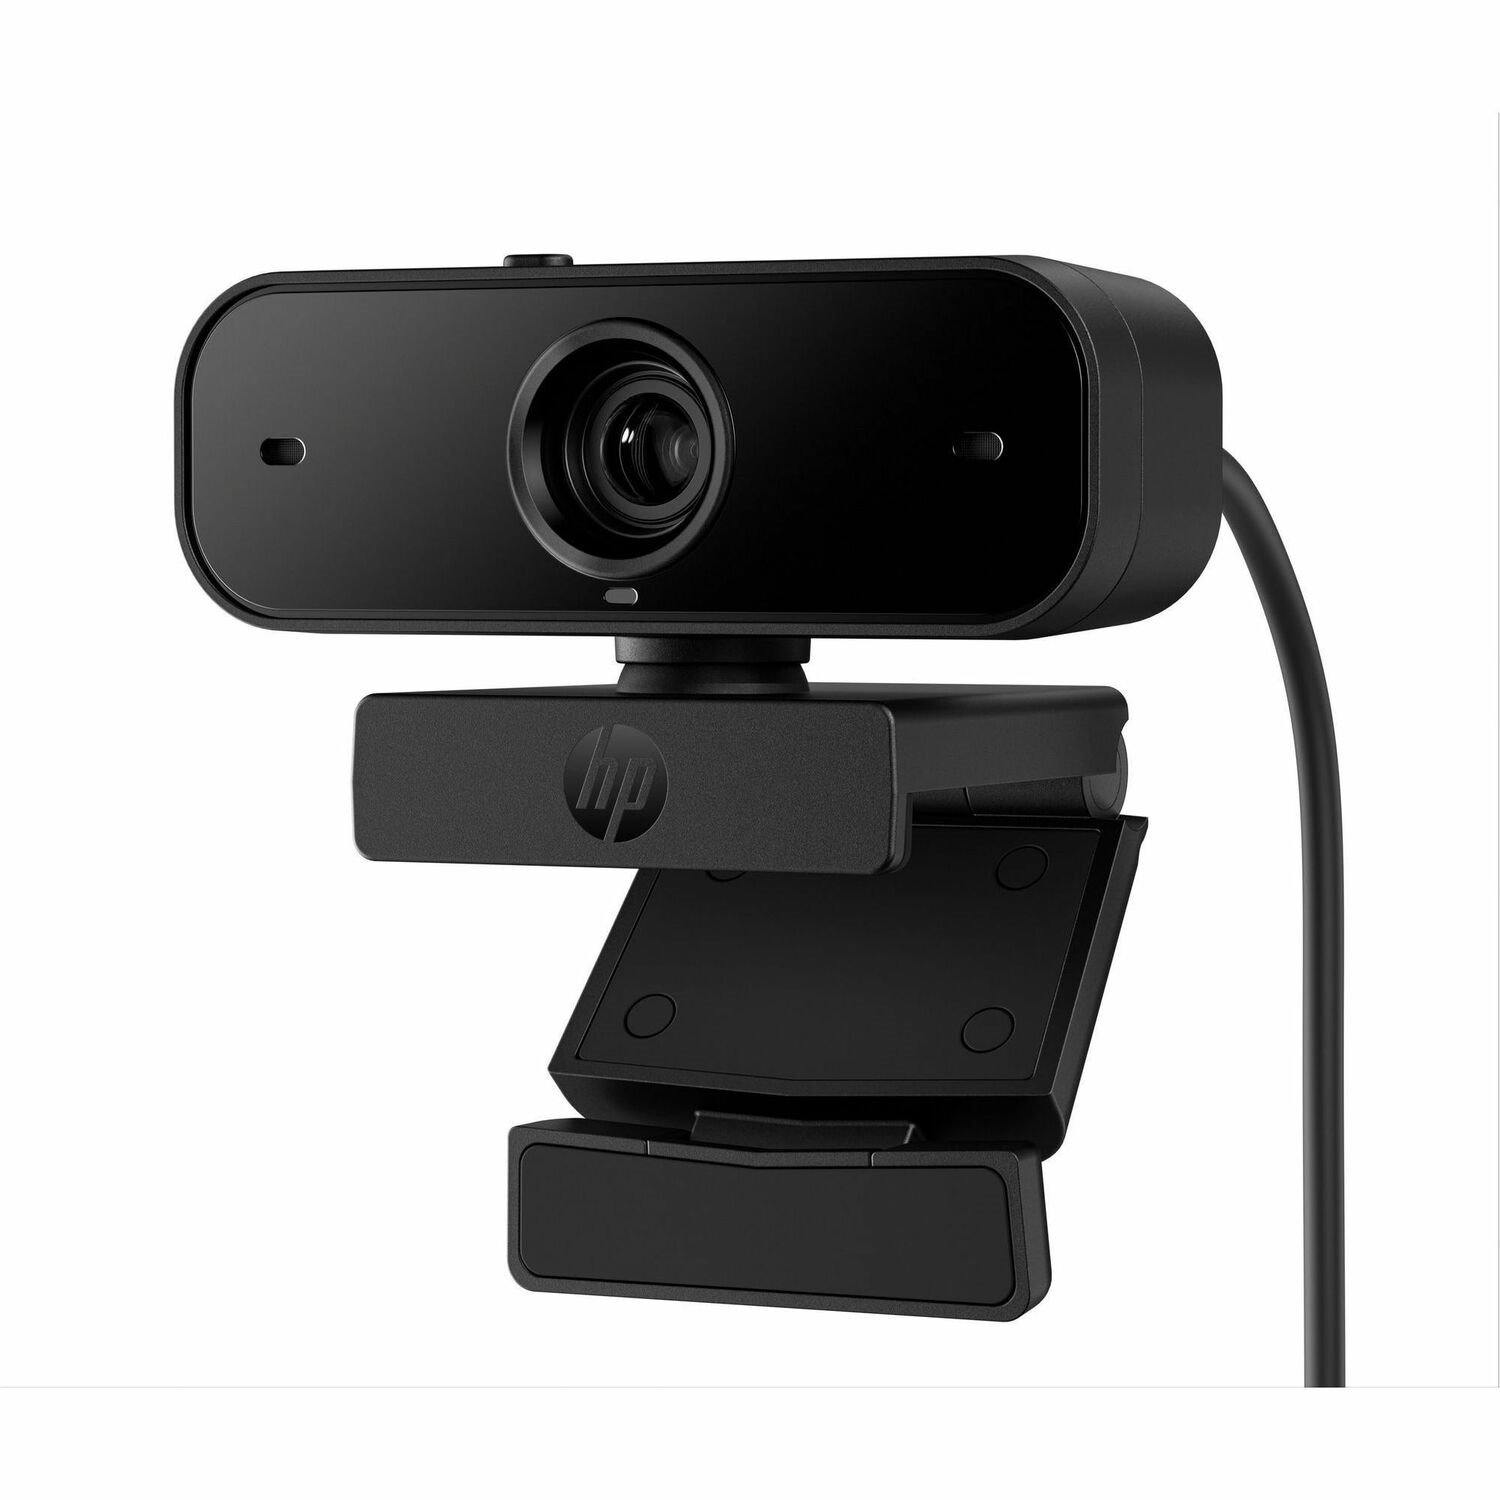 HP 435 Webcam - 2 Megapixel - 60 fps - Black - USB 2.0 Type A